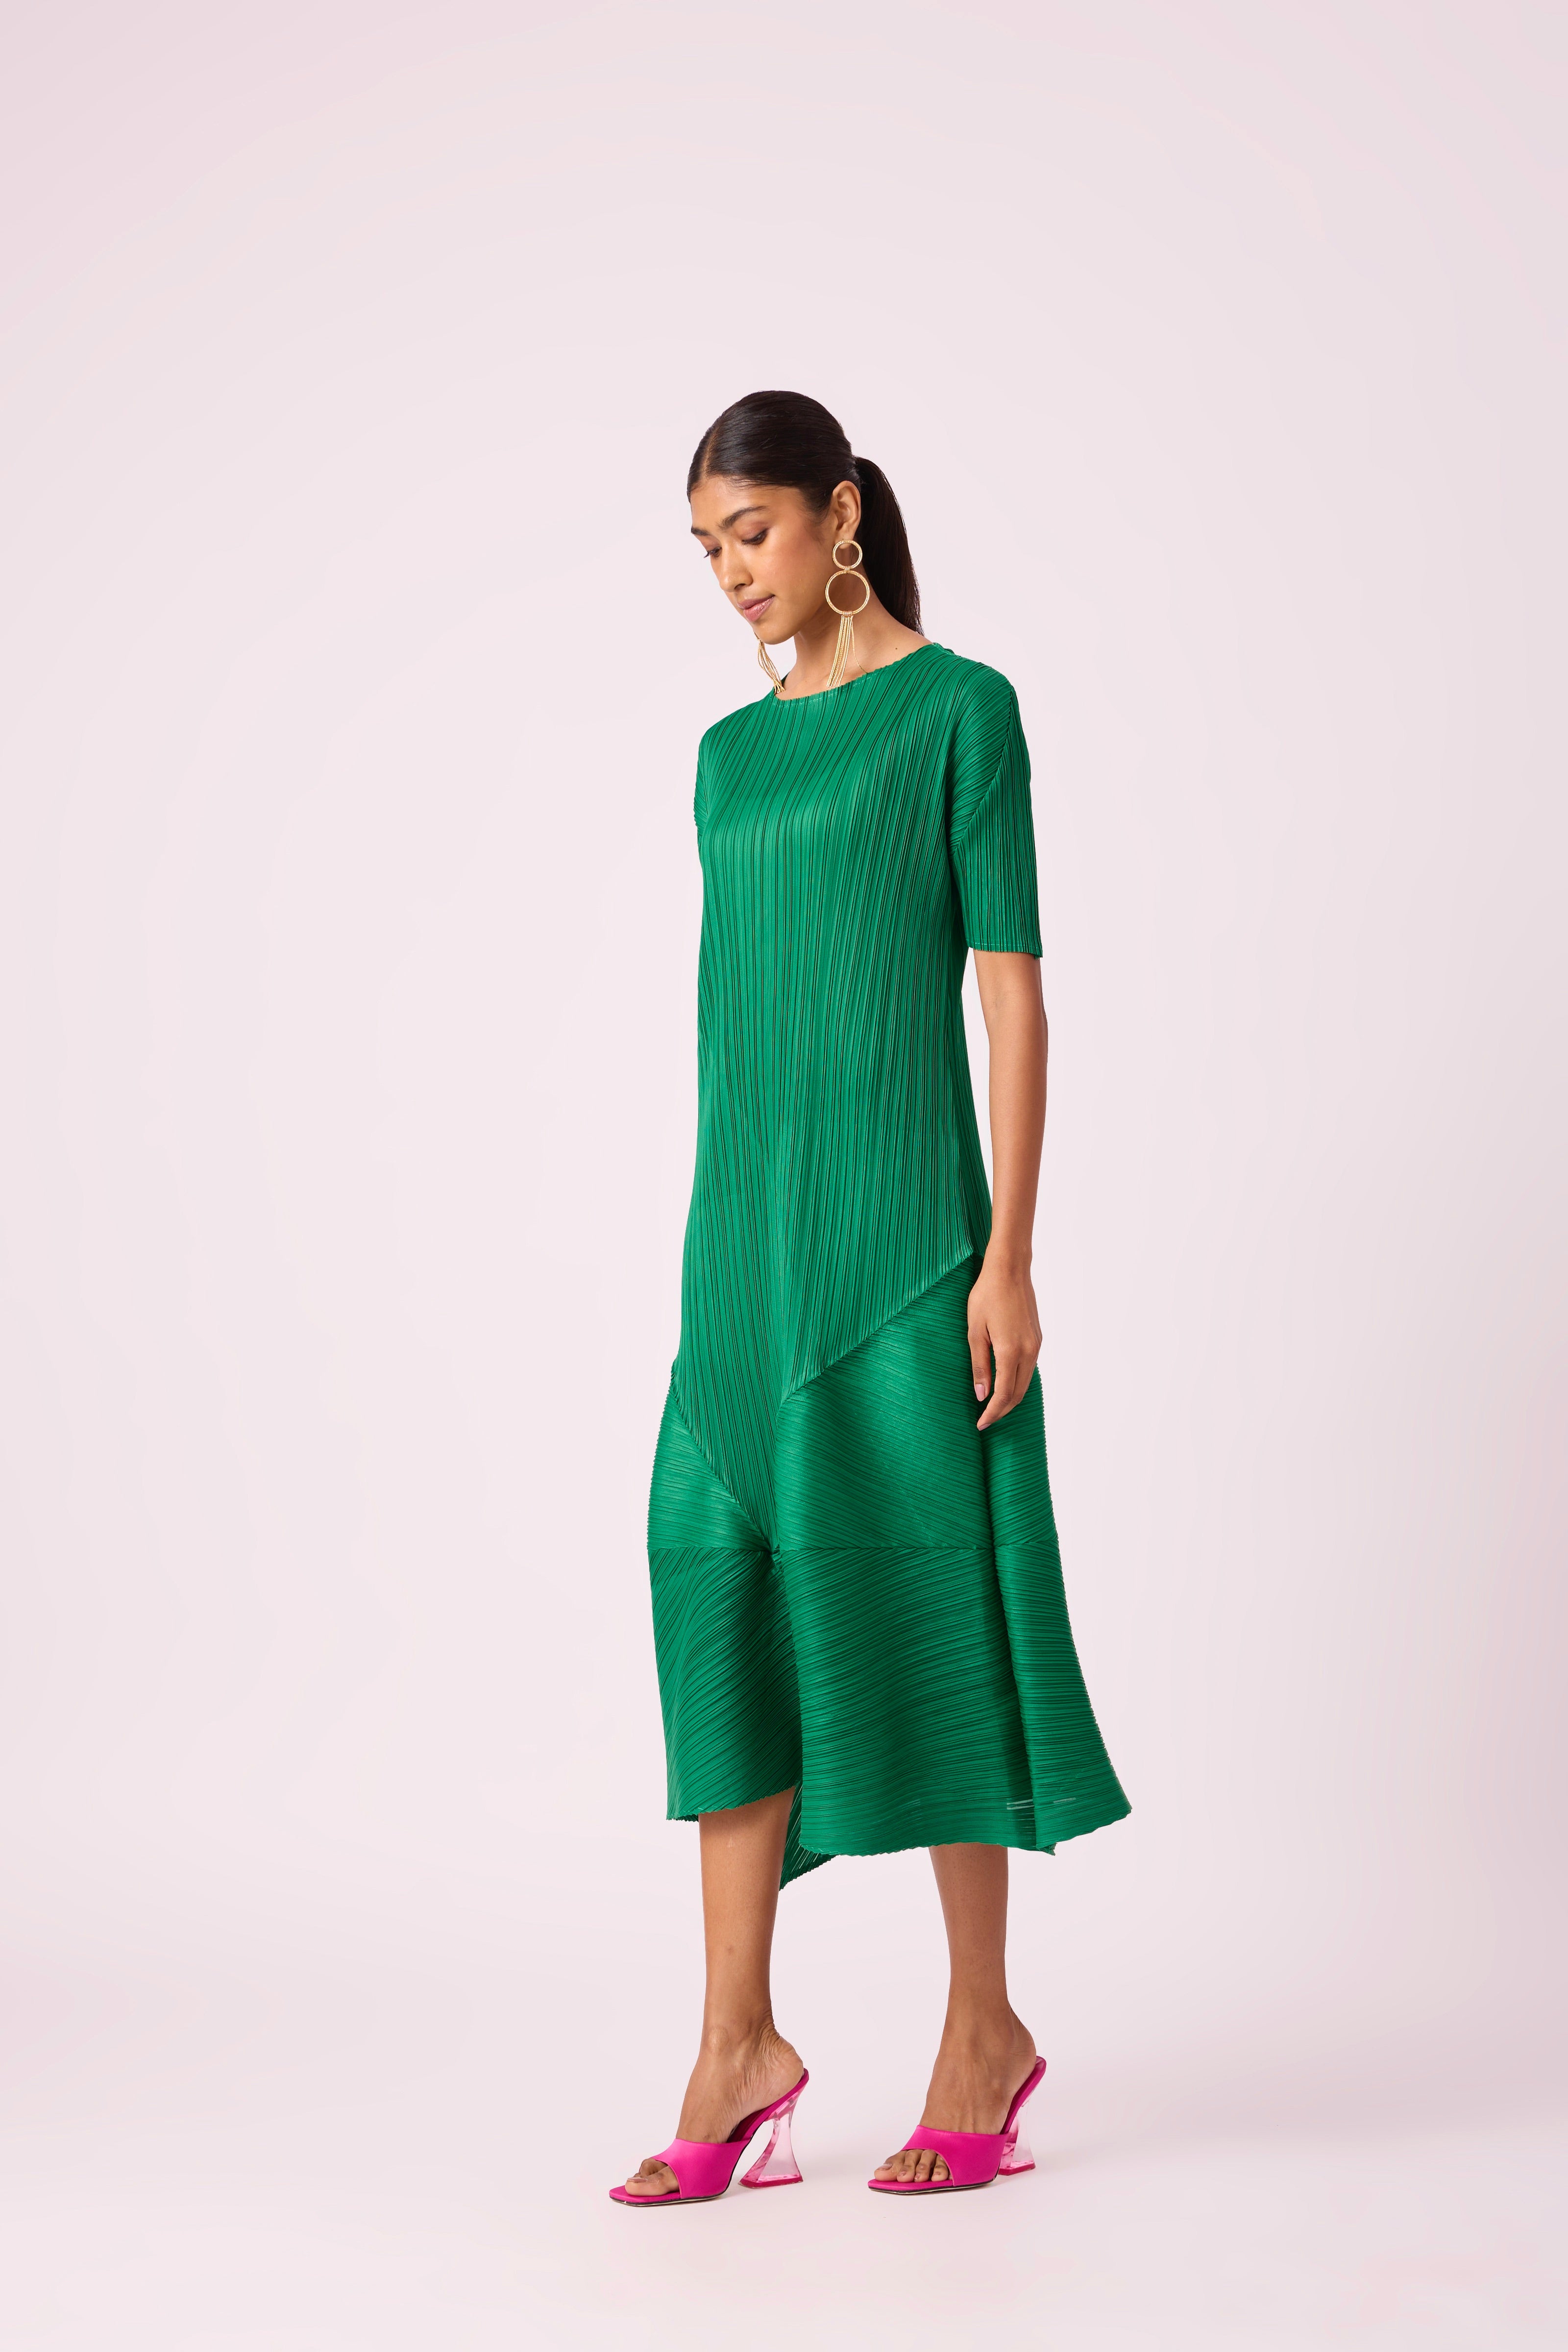 Biance Dress - Green